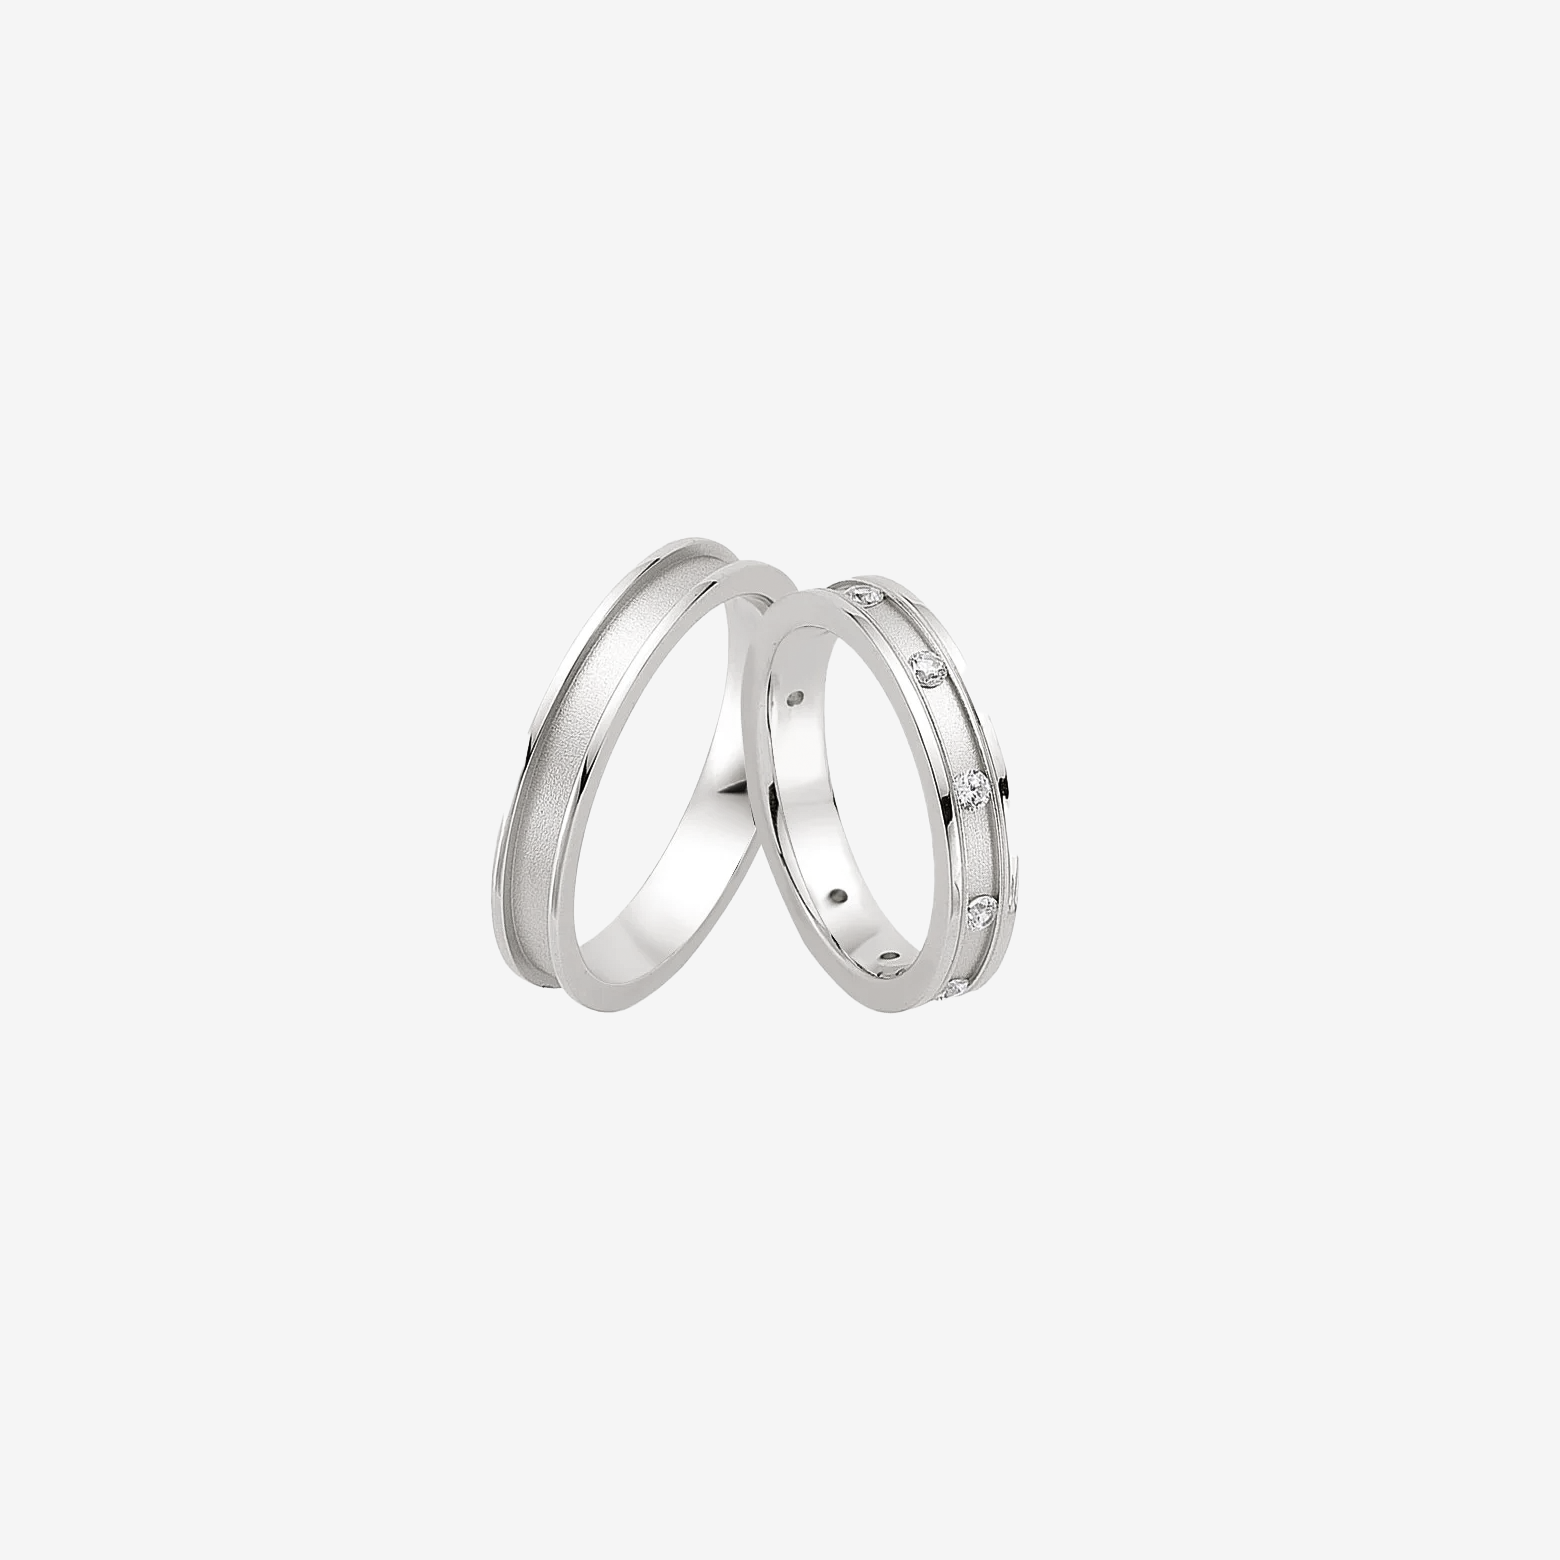 Calista Diamond Wedding Rings - White Gold - Pair